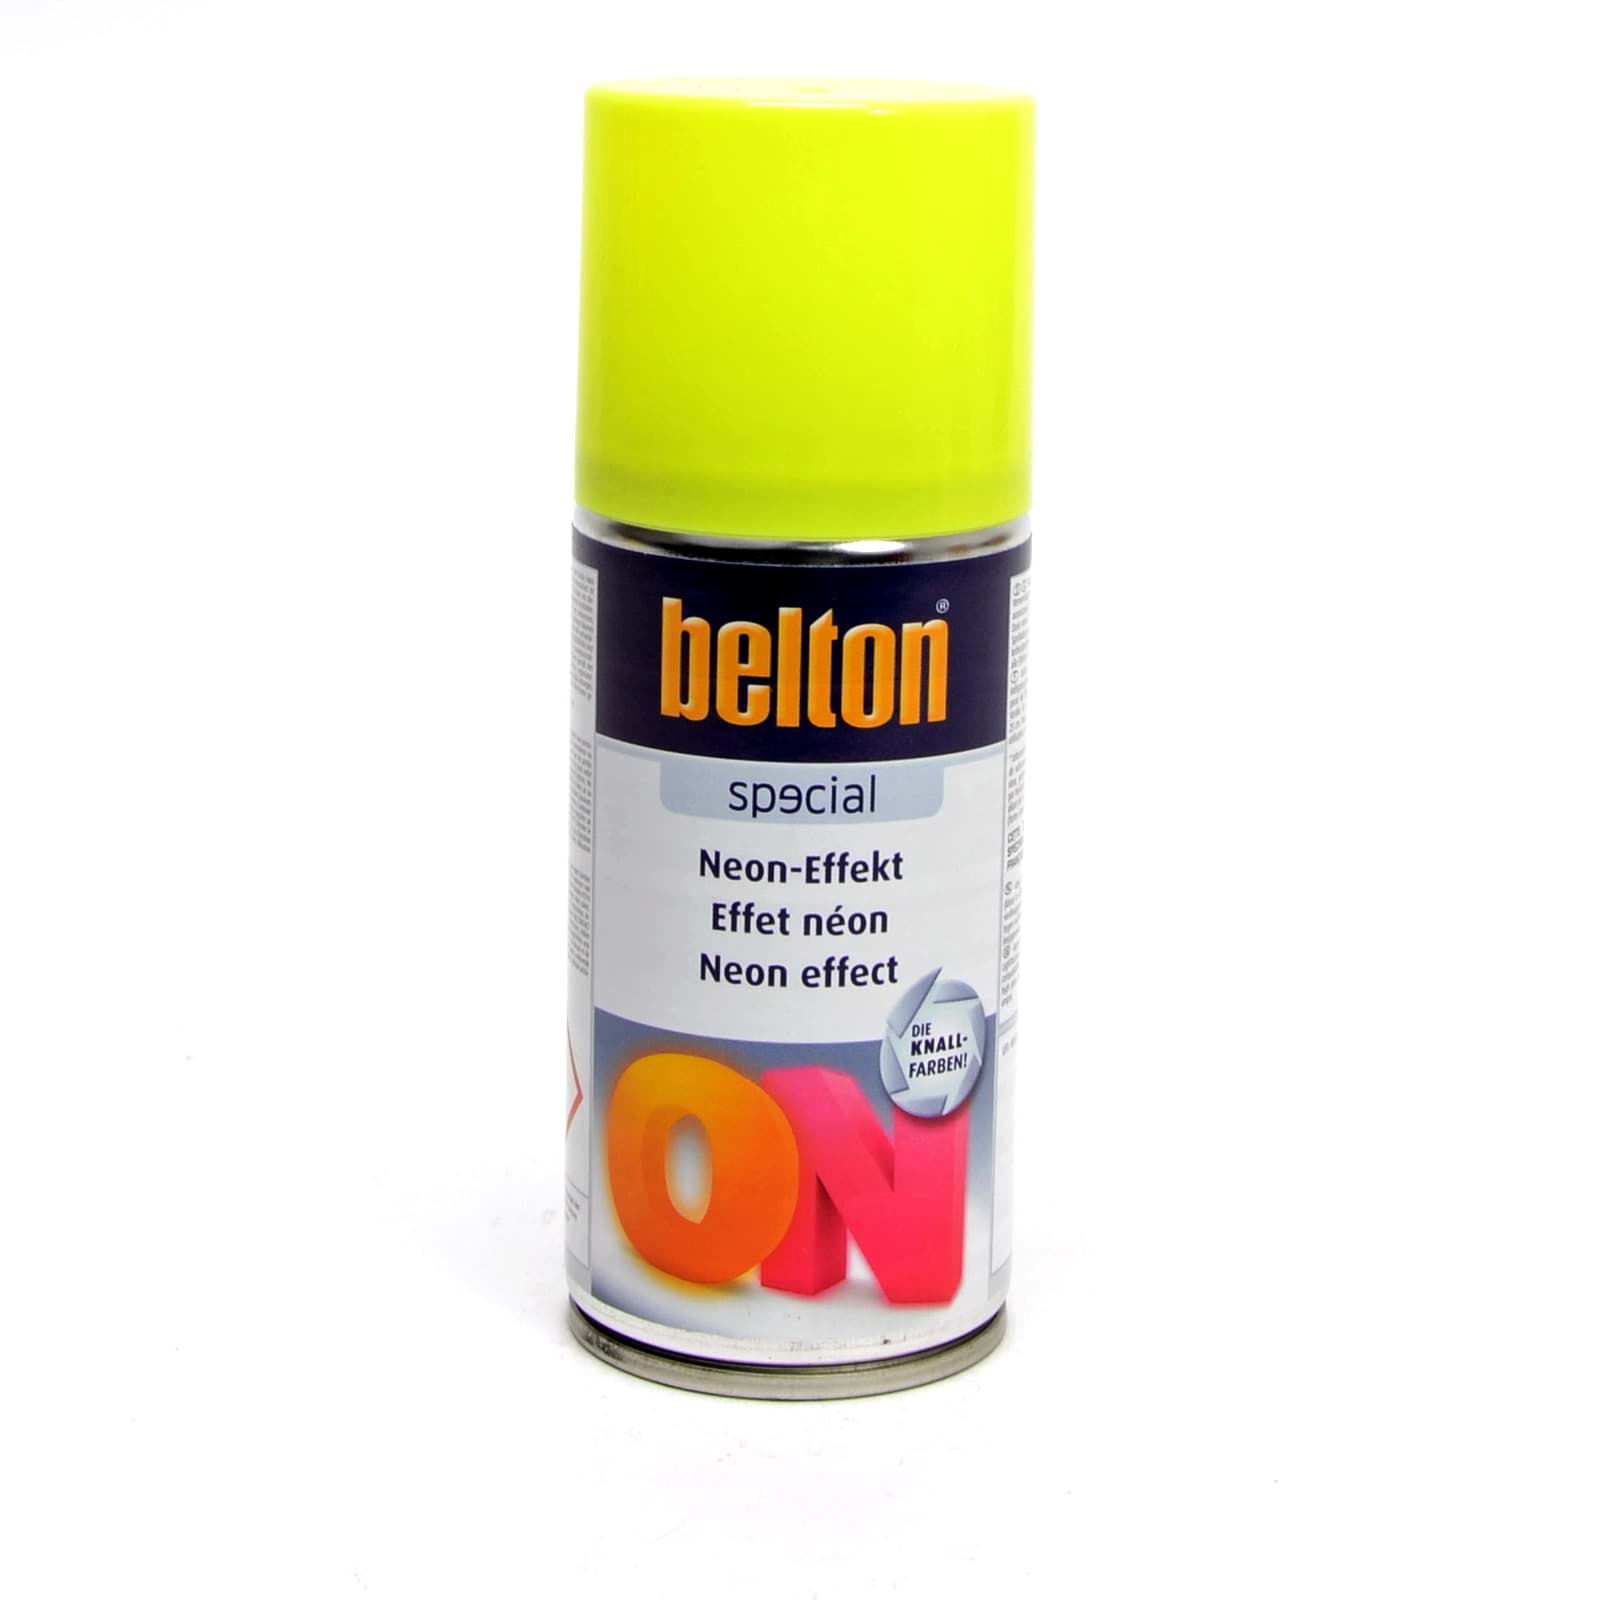 Изображение Belton SPECIAL NEON-EFFEKT Gelb 150ml